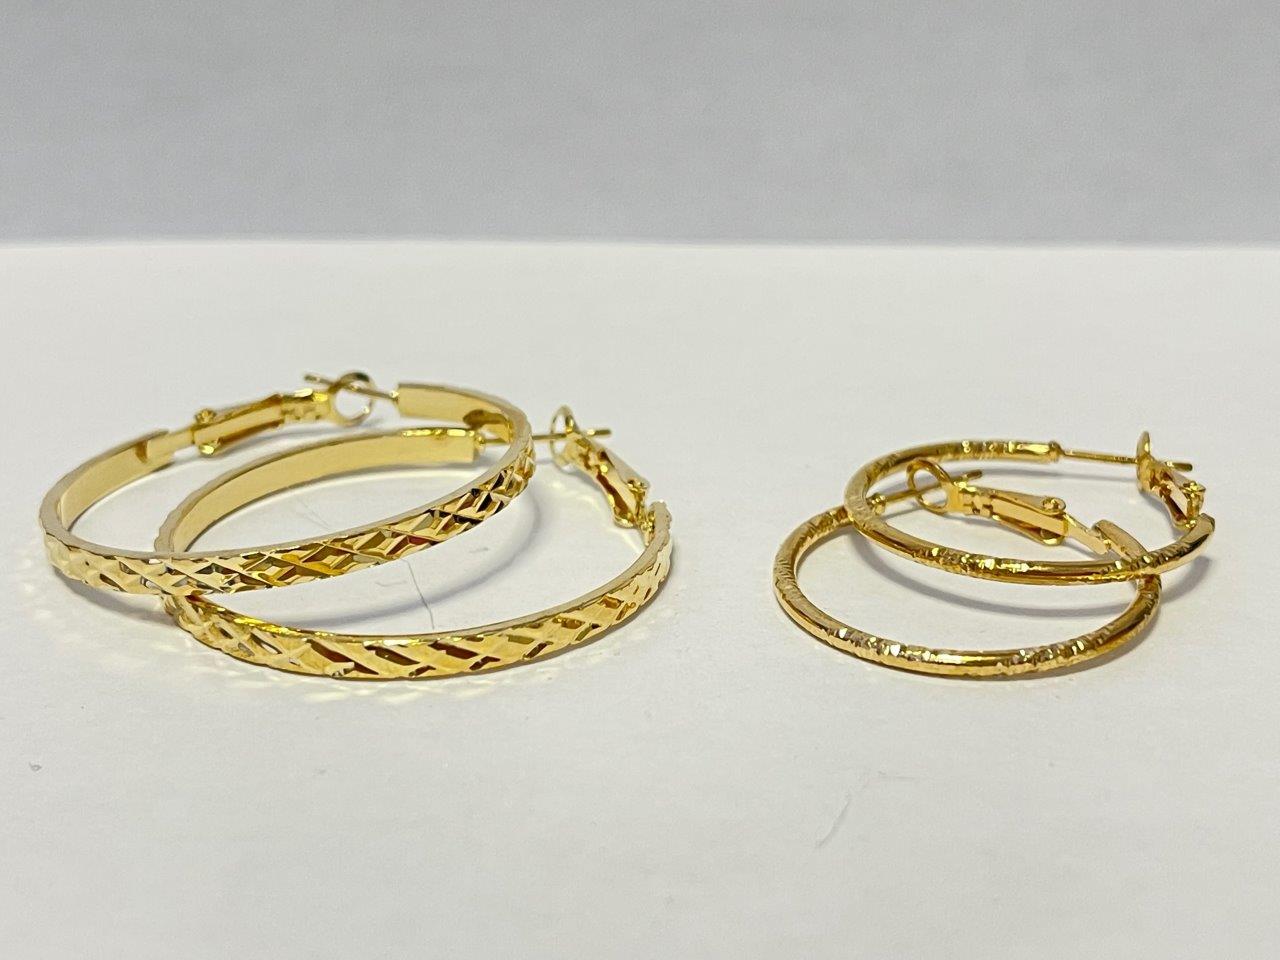 10 Pairs Gold Sparkle Cut Hoop Earrings 2 Sizes 5 Each (3cm and 4cm)|GCJ314|UK SELLER